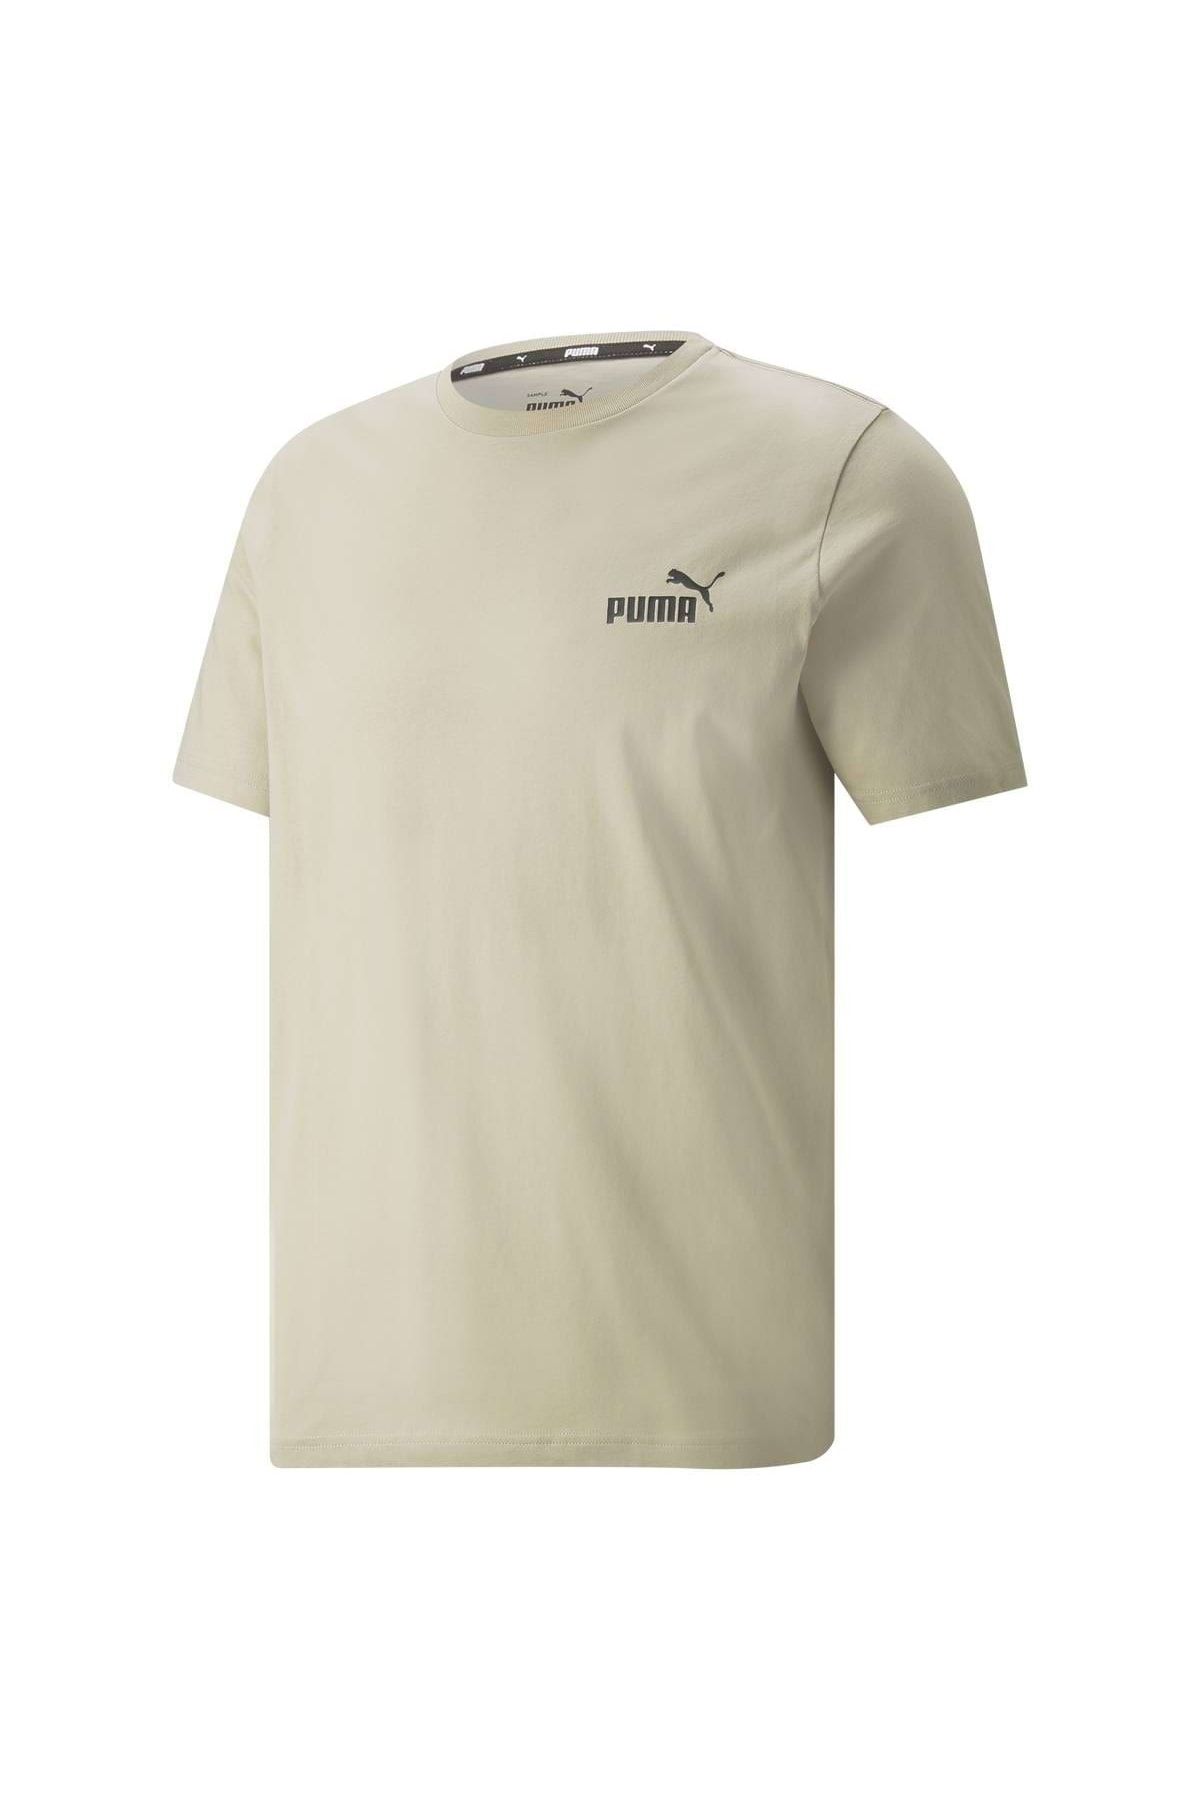 Puma T-Shirt - Beige - Trendyol Regular fit 